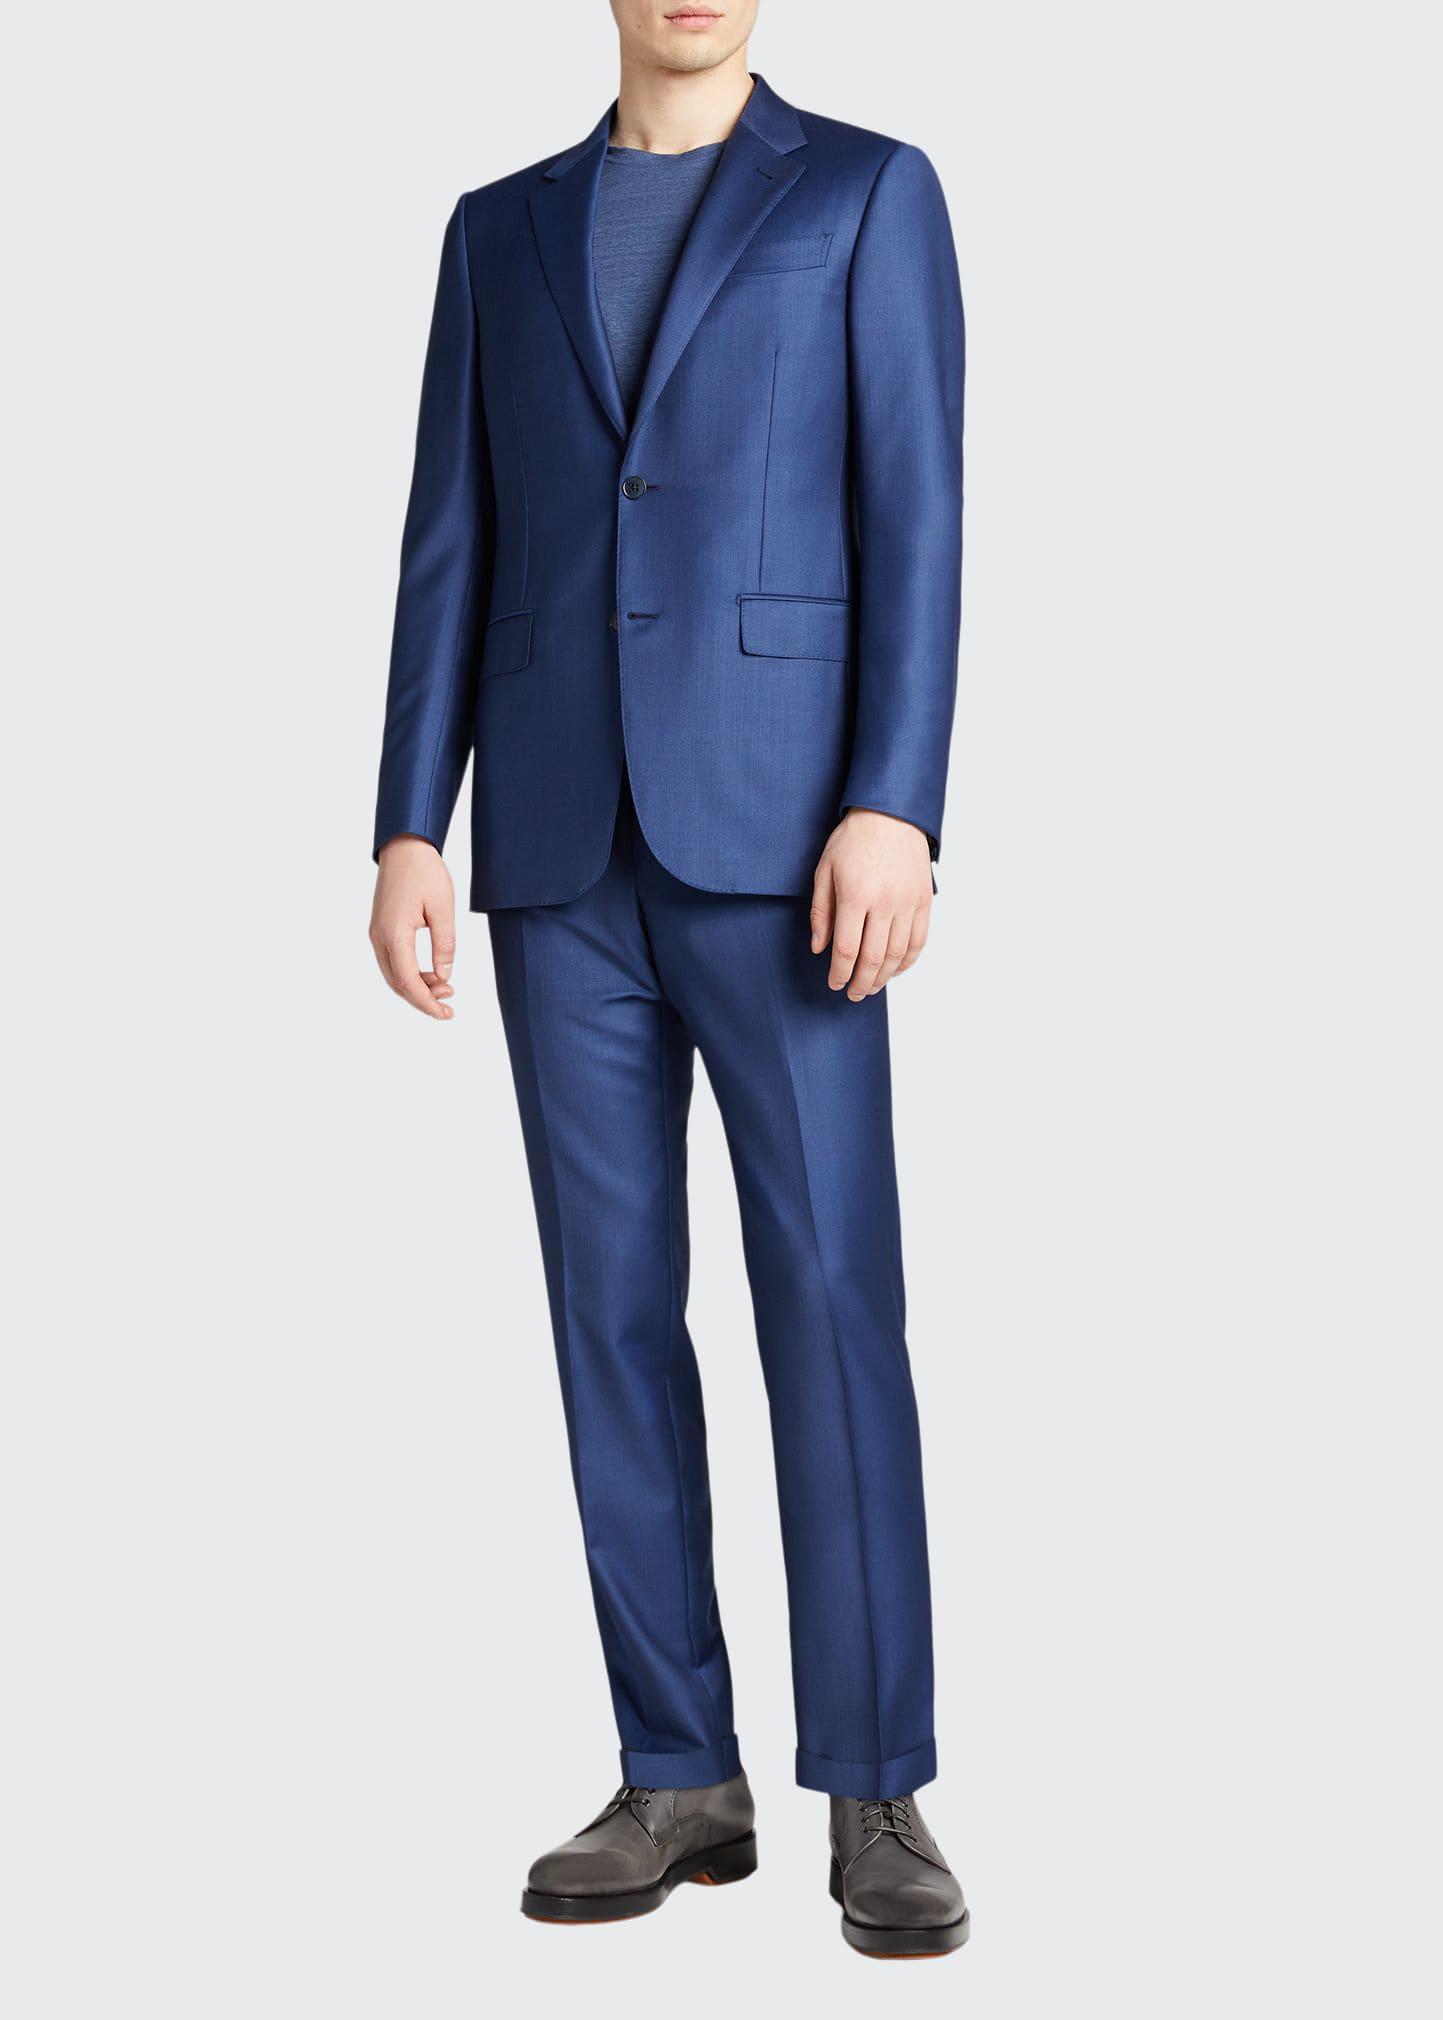 Ermenegildo Zegna Sharkskin Wool Two-piece Suit in Blue for Men | Lyst